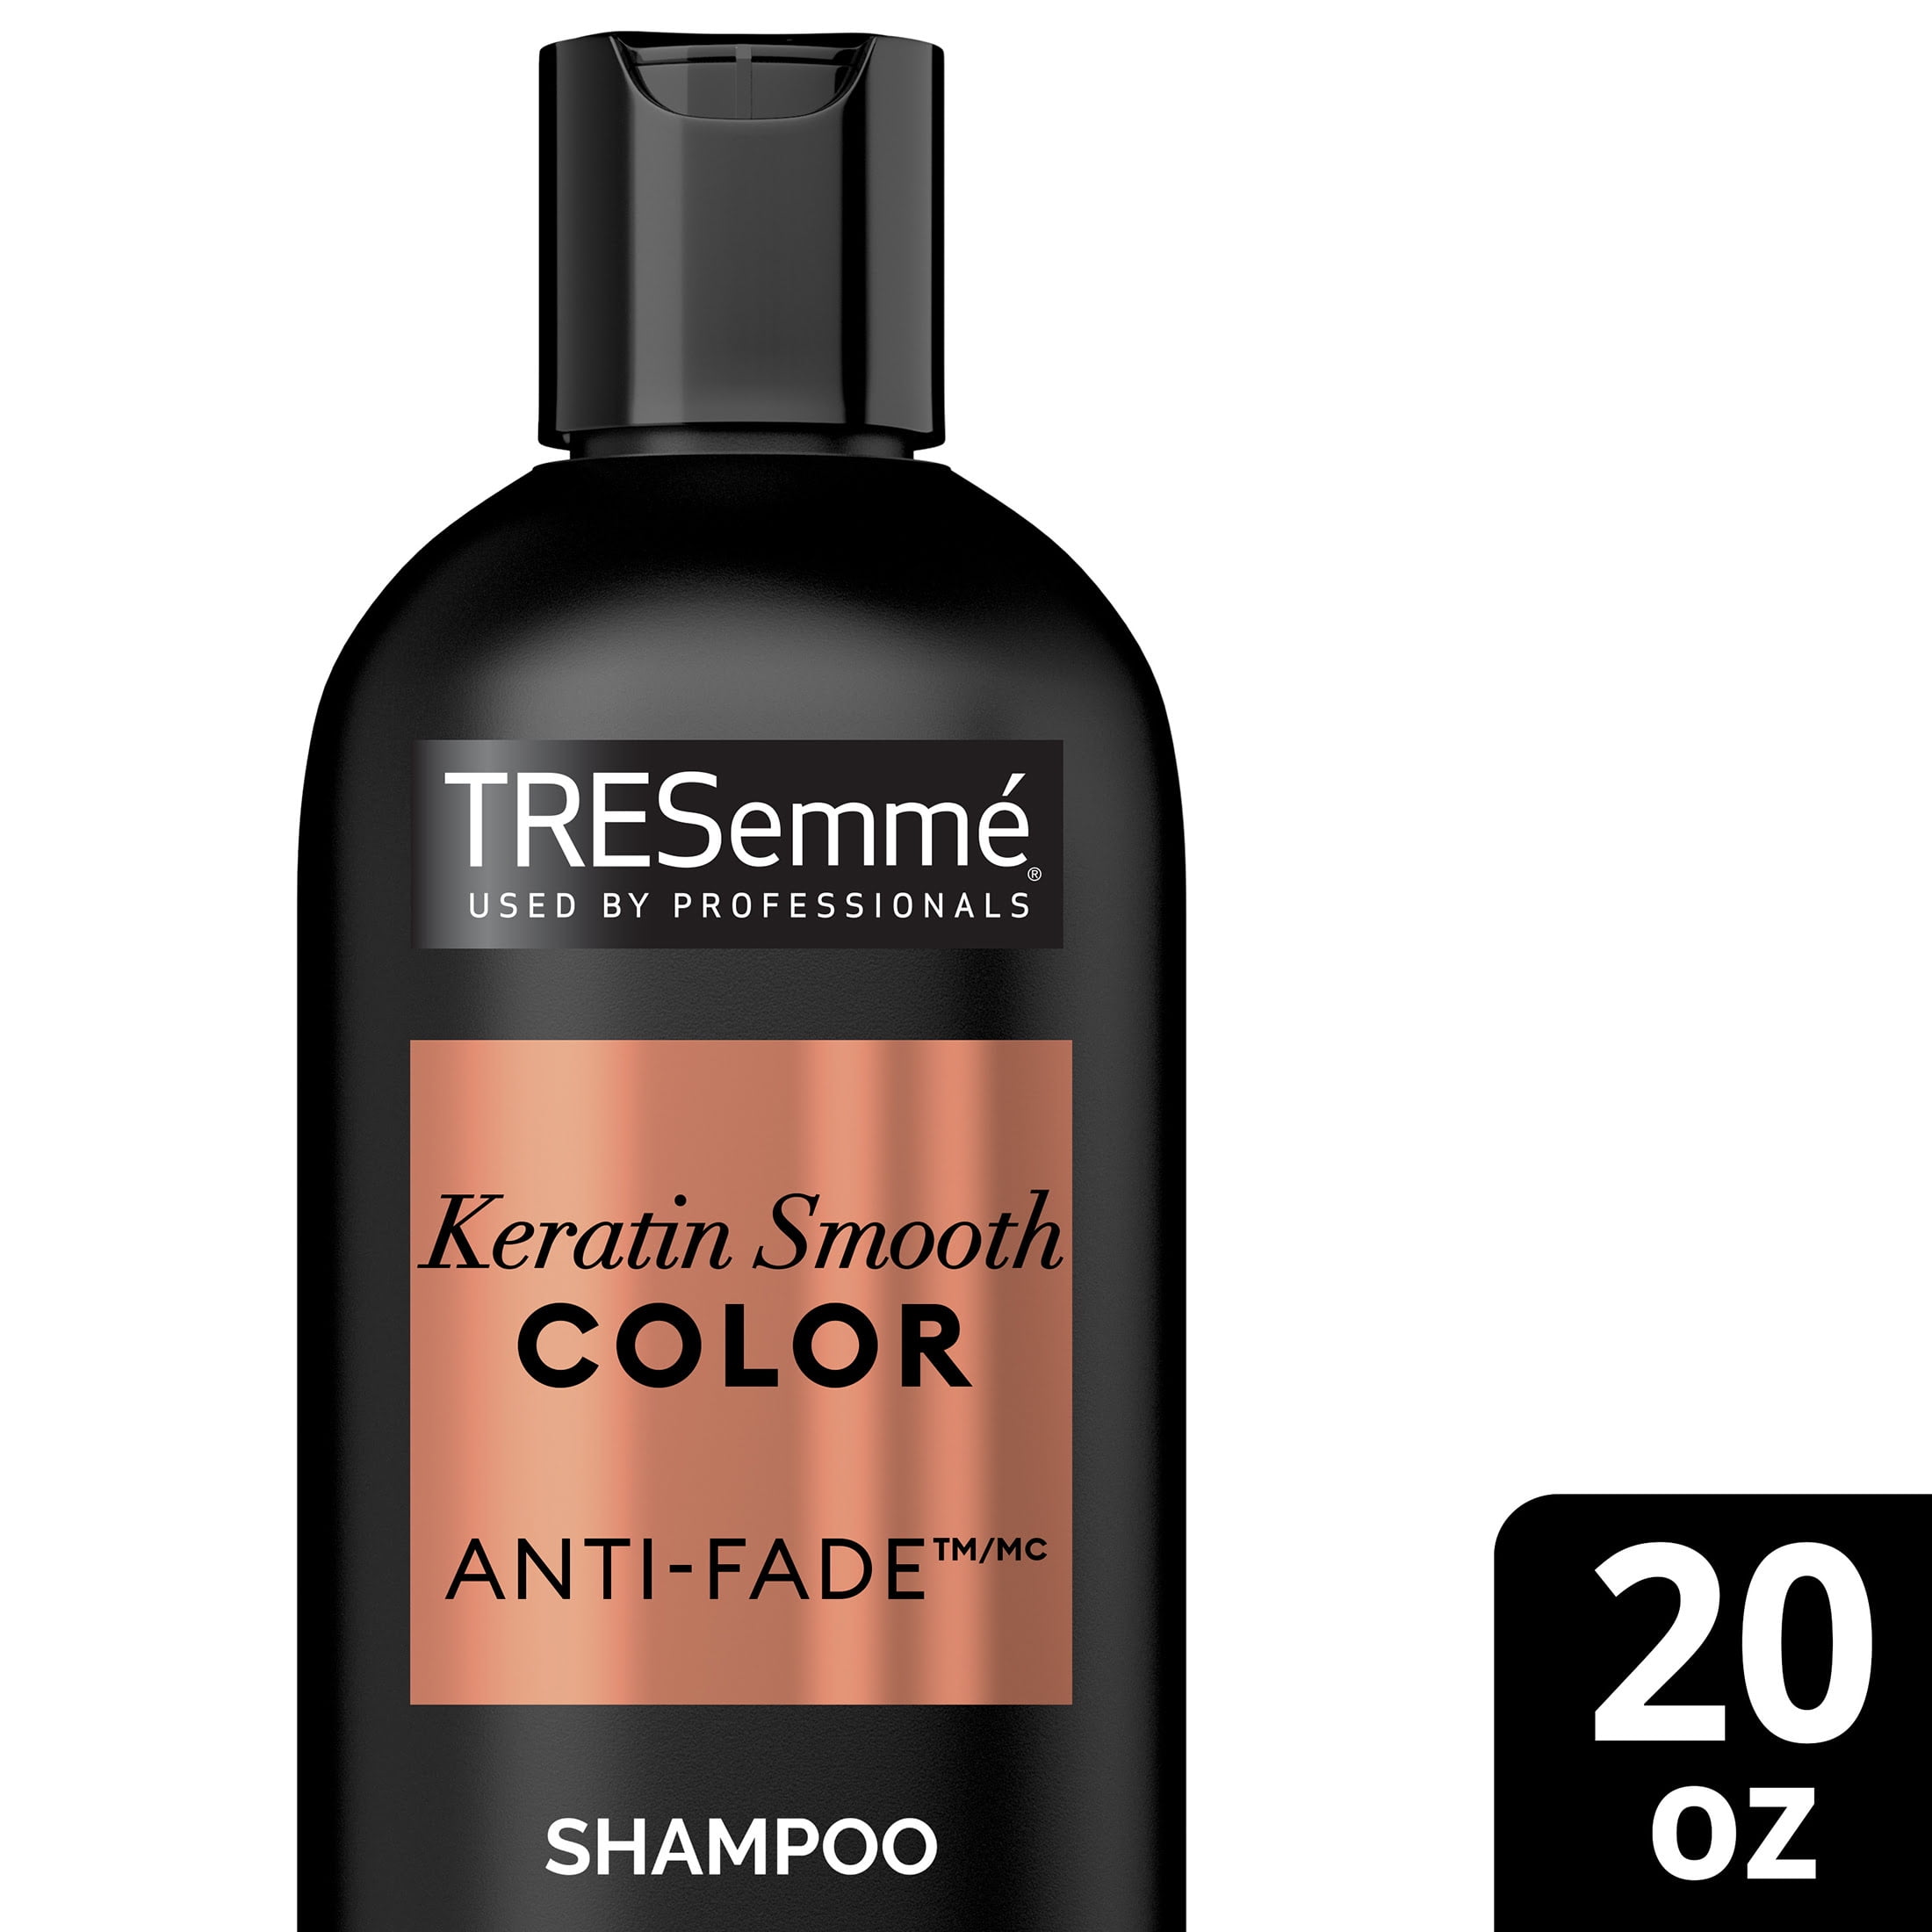 Tresemme Keratin Smooth Color Anti-Fade Moisturizing Daily Shampoo 20 fl oz  